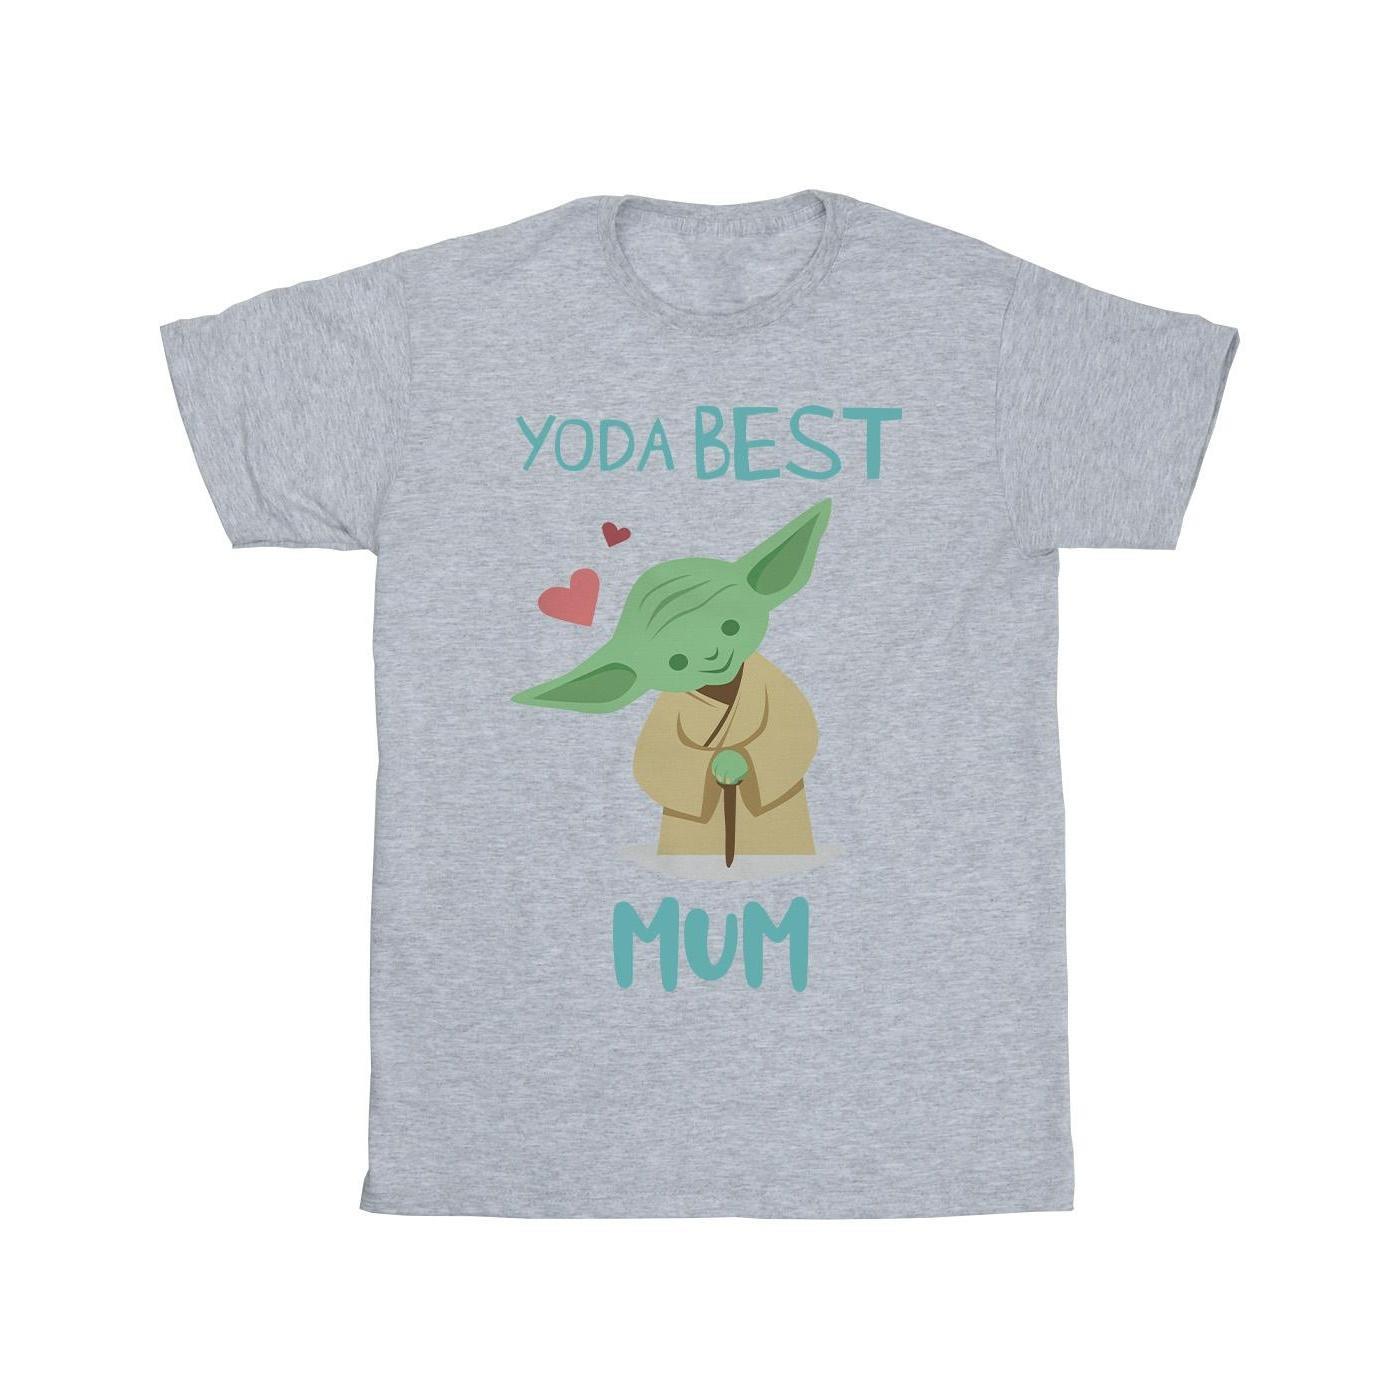 Star Wars Girls Yoda Best Mum Cotton T-Shirt (Sports Grey) (9-11 Years)